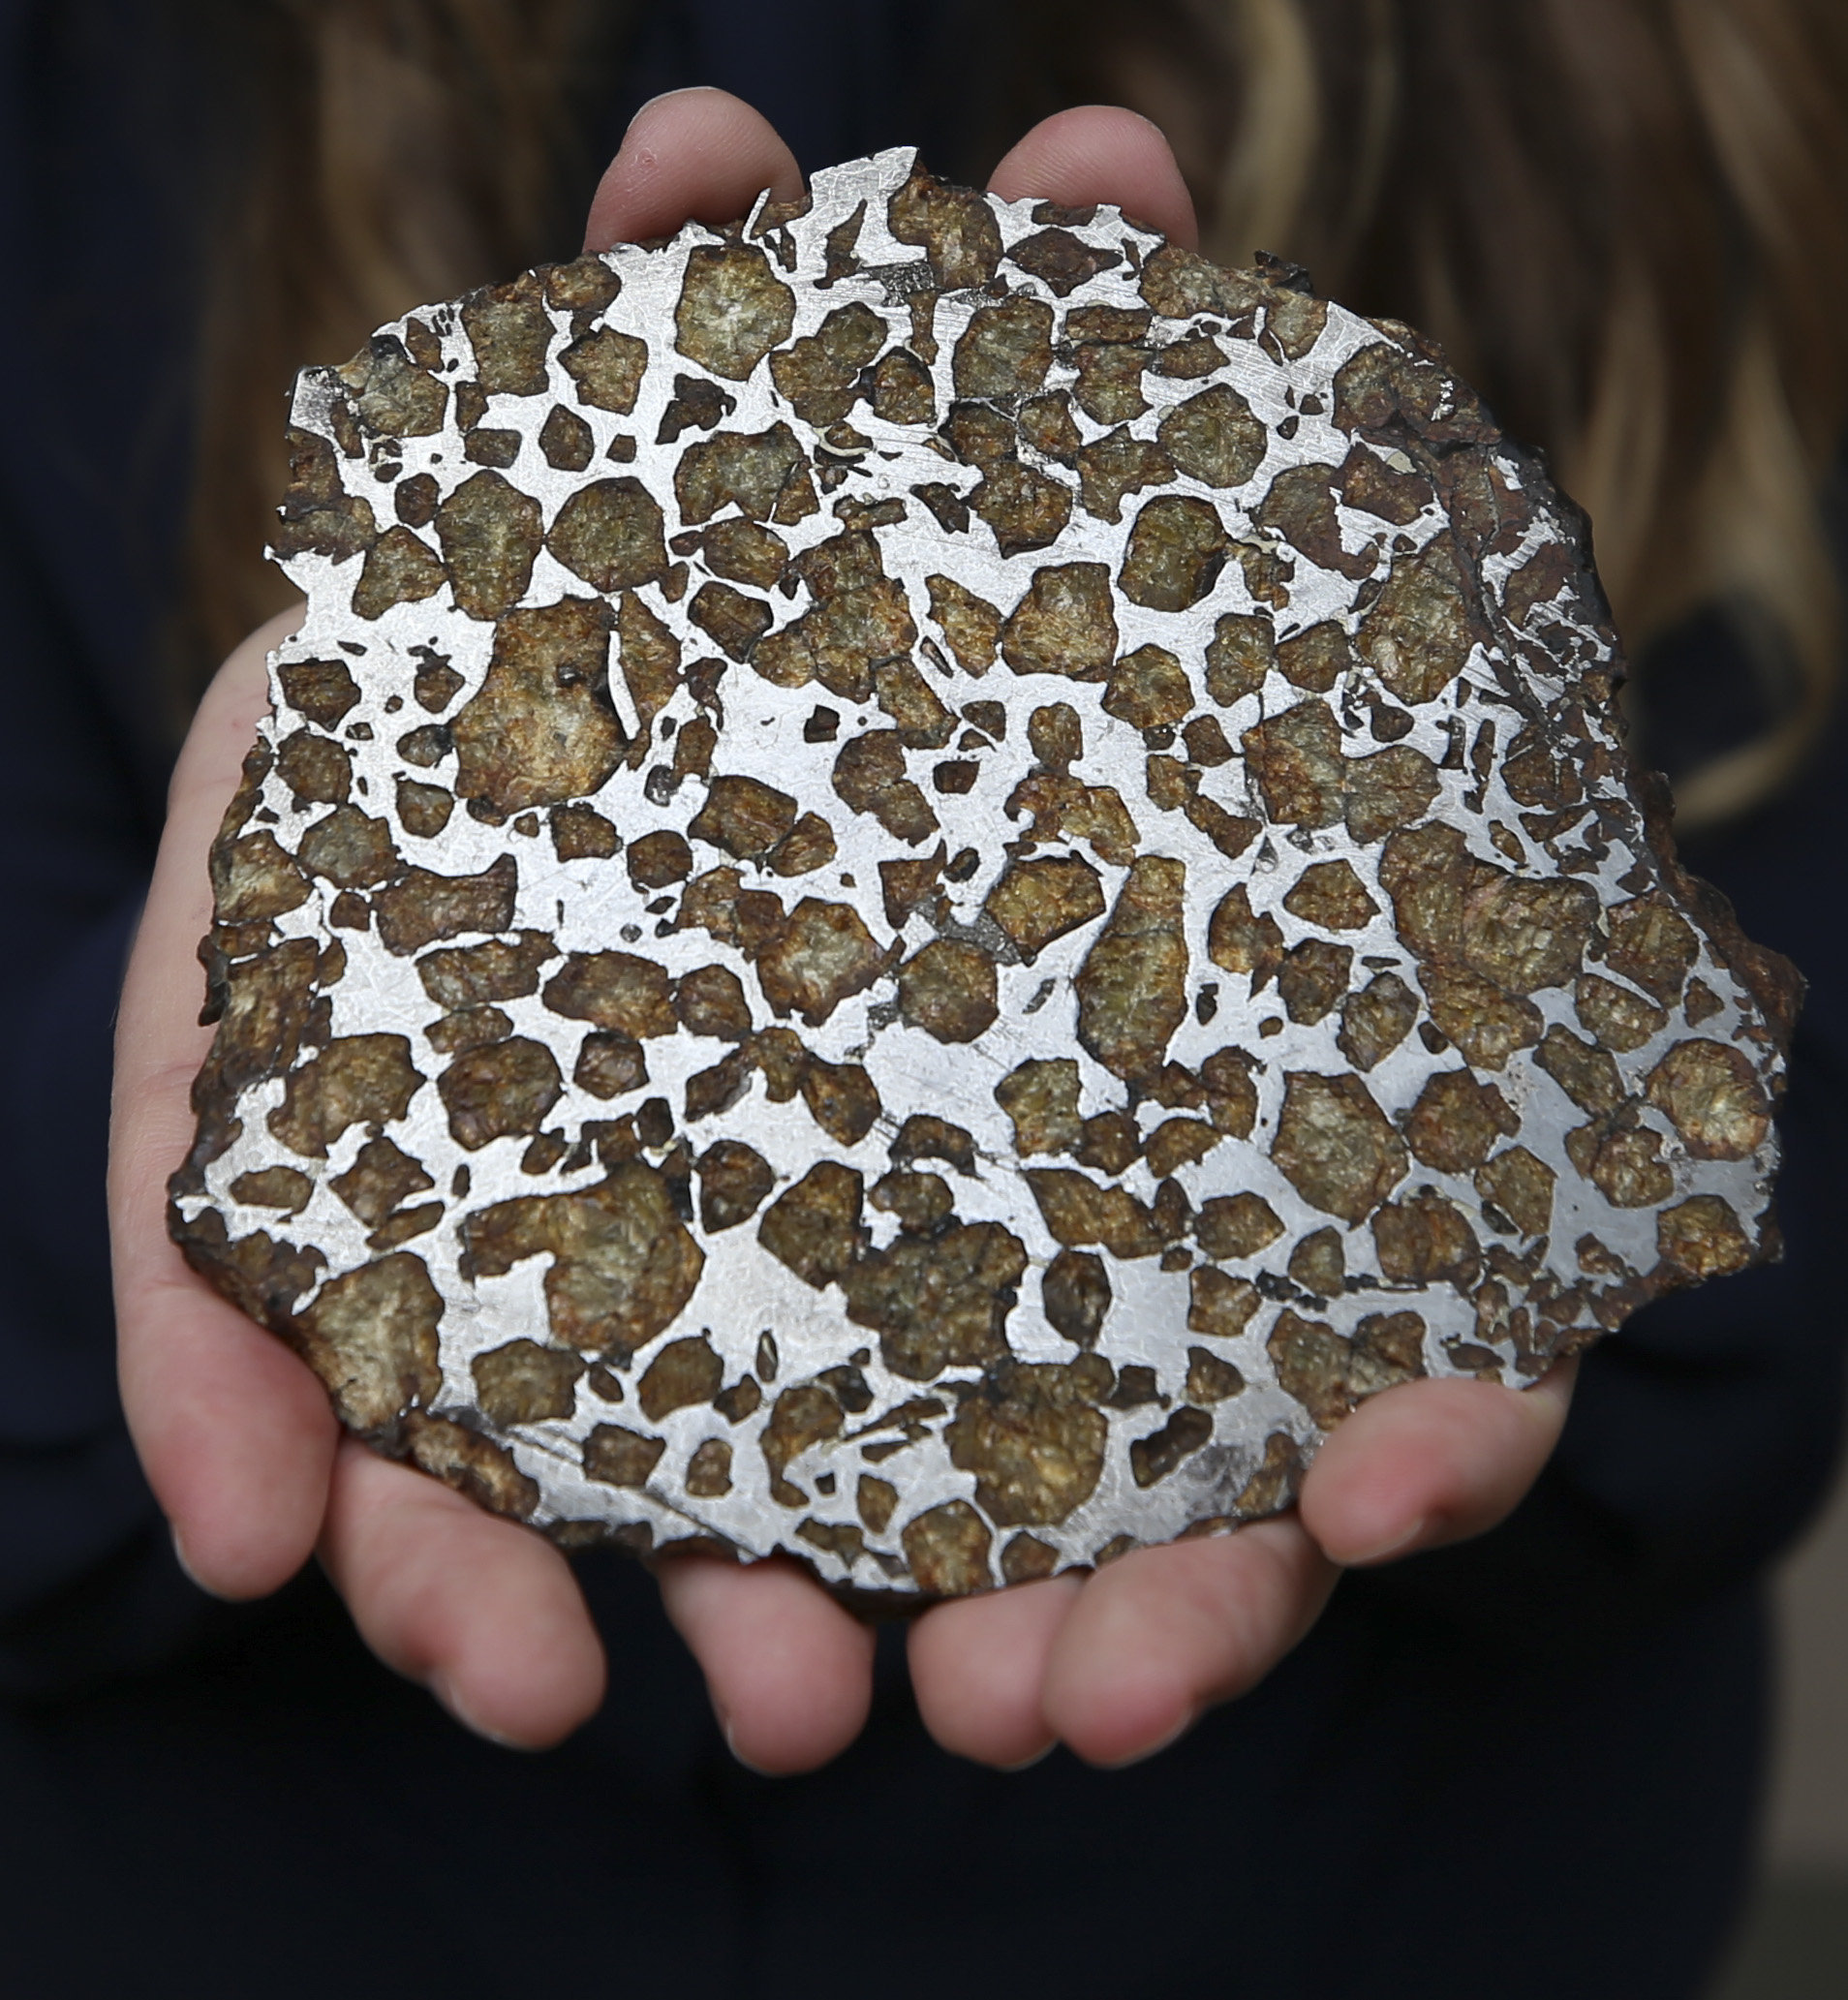 A pallasite meteorite from Hunterian Museum Picture: Gordon Terris